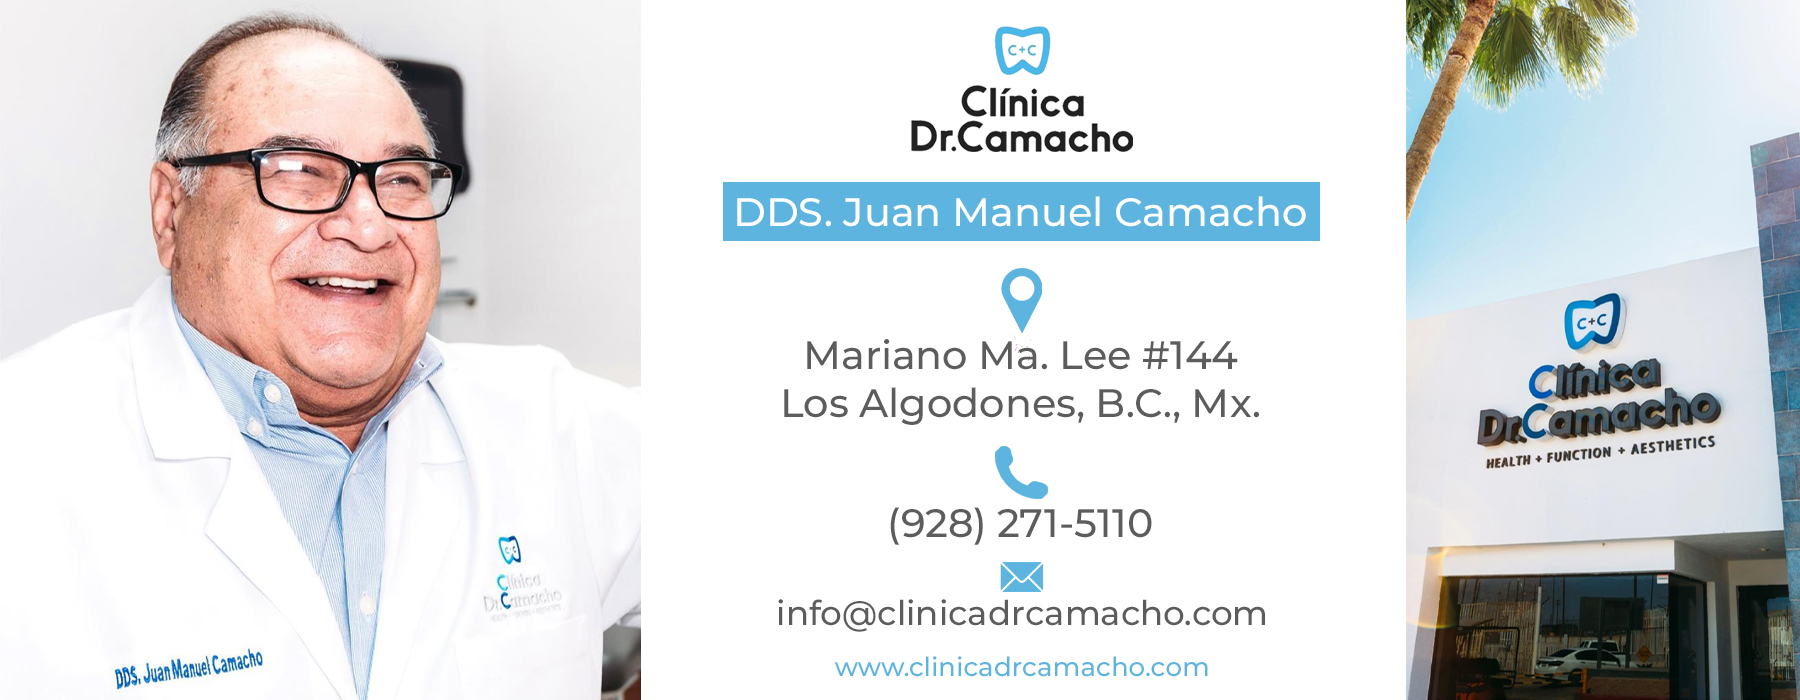  Clínica Dr. Camacho